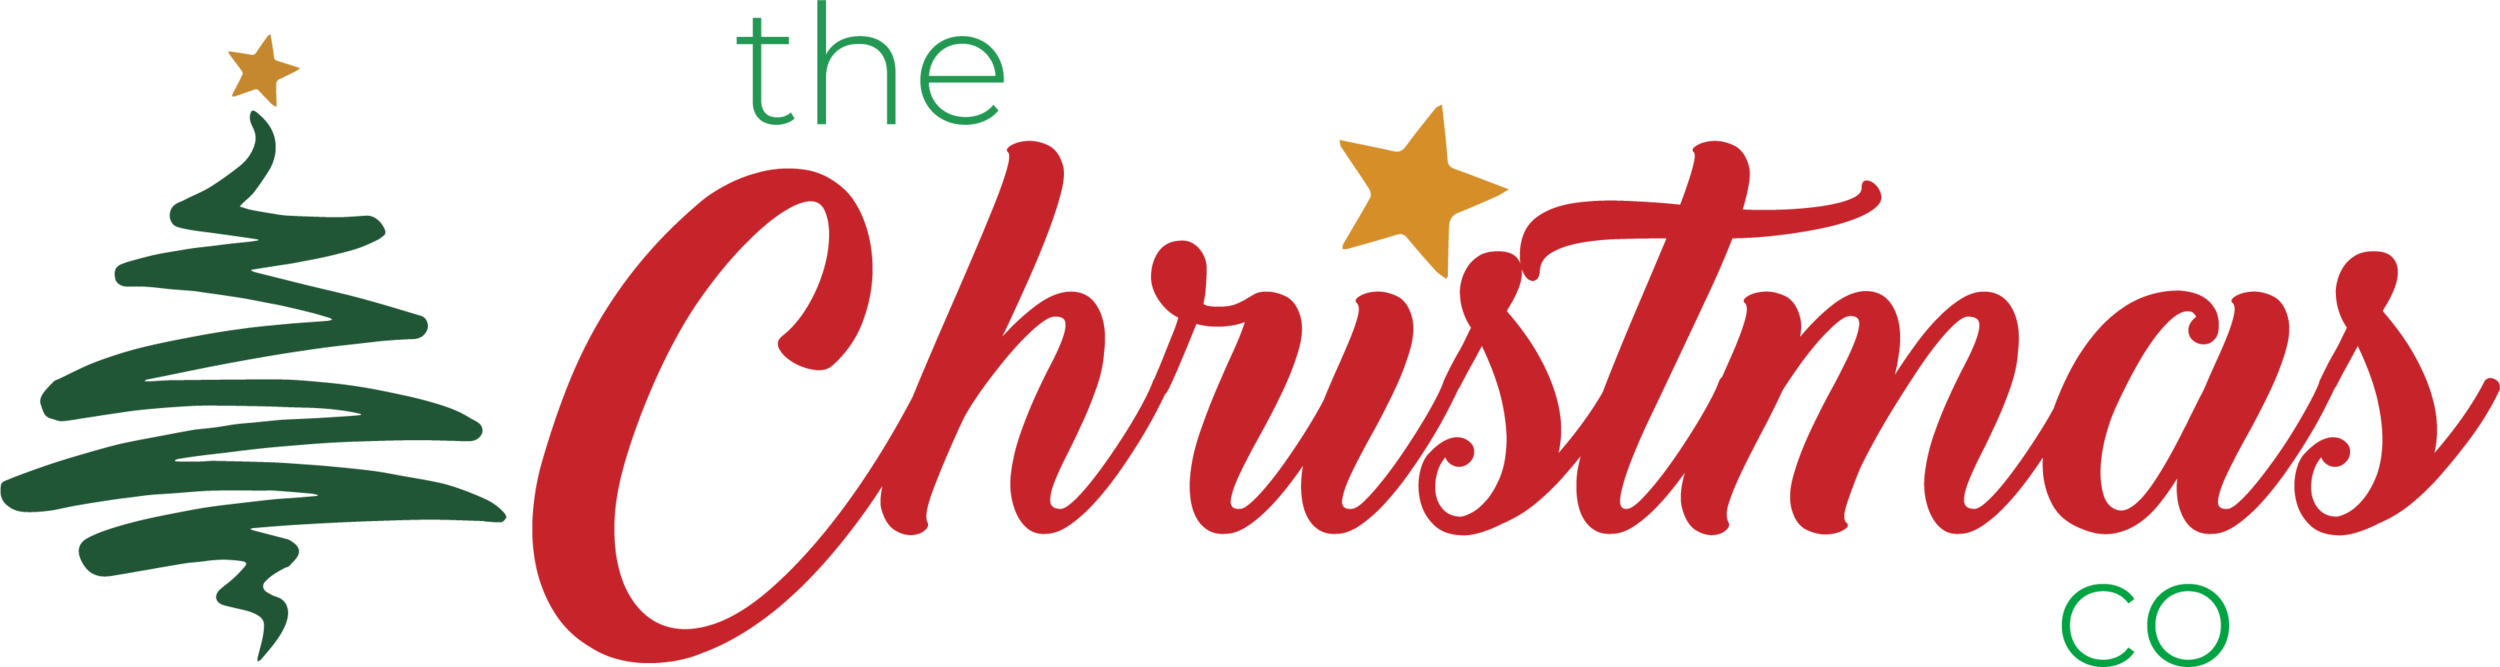 The Christmas Company